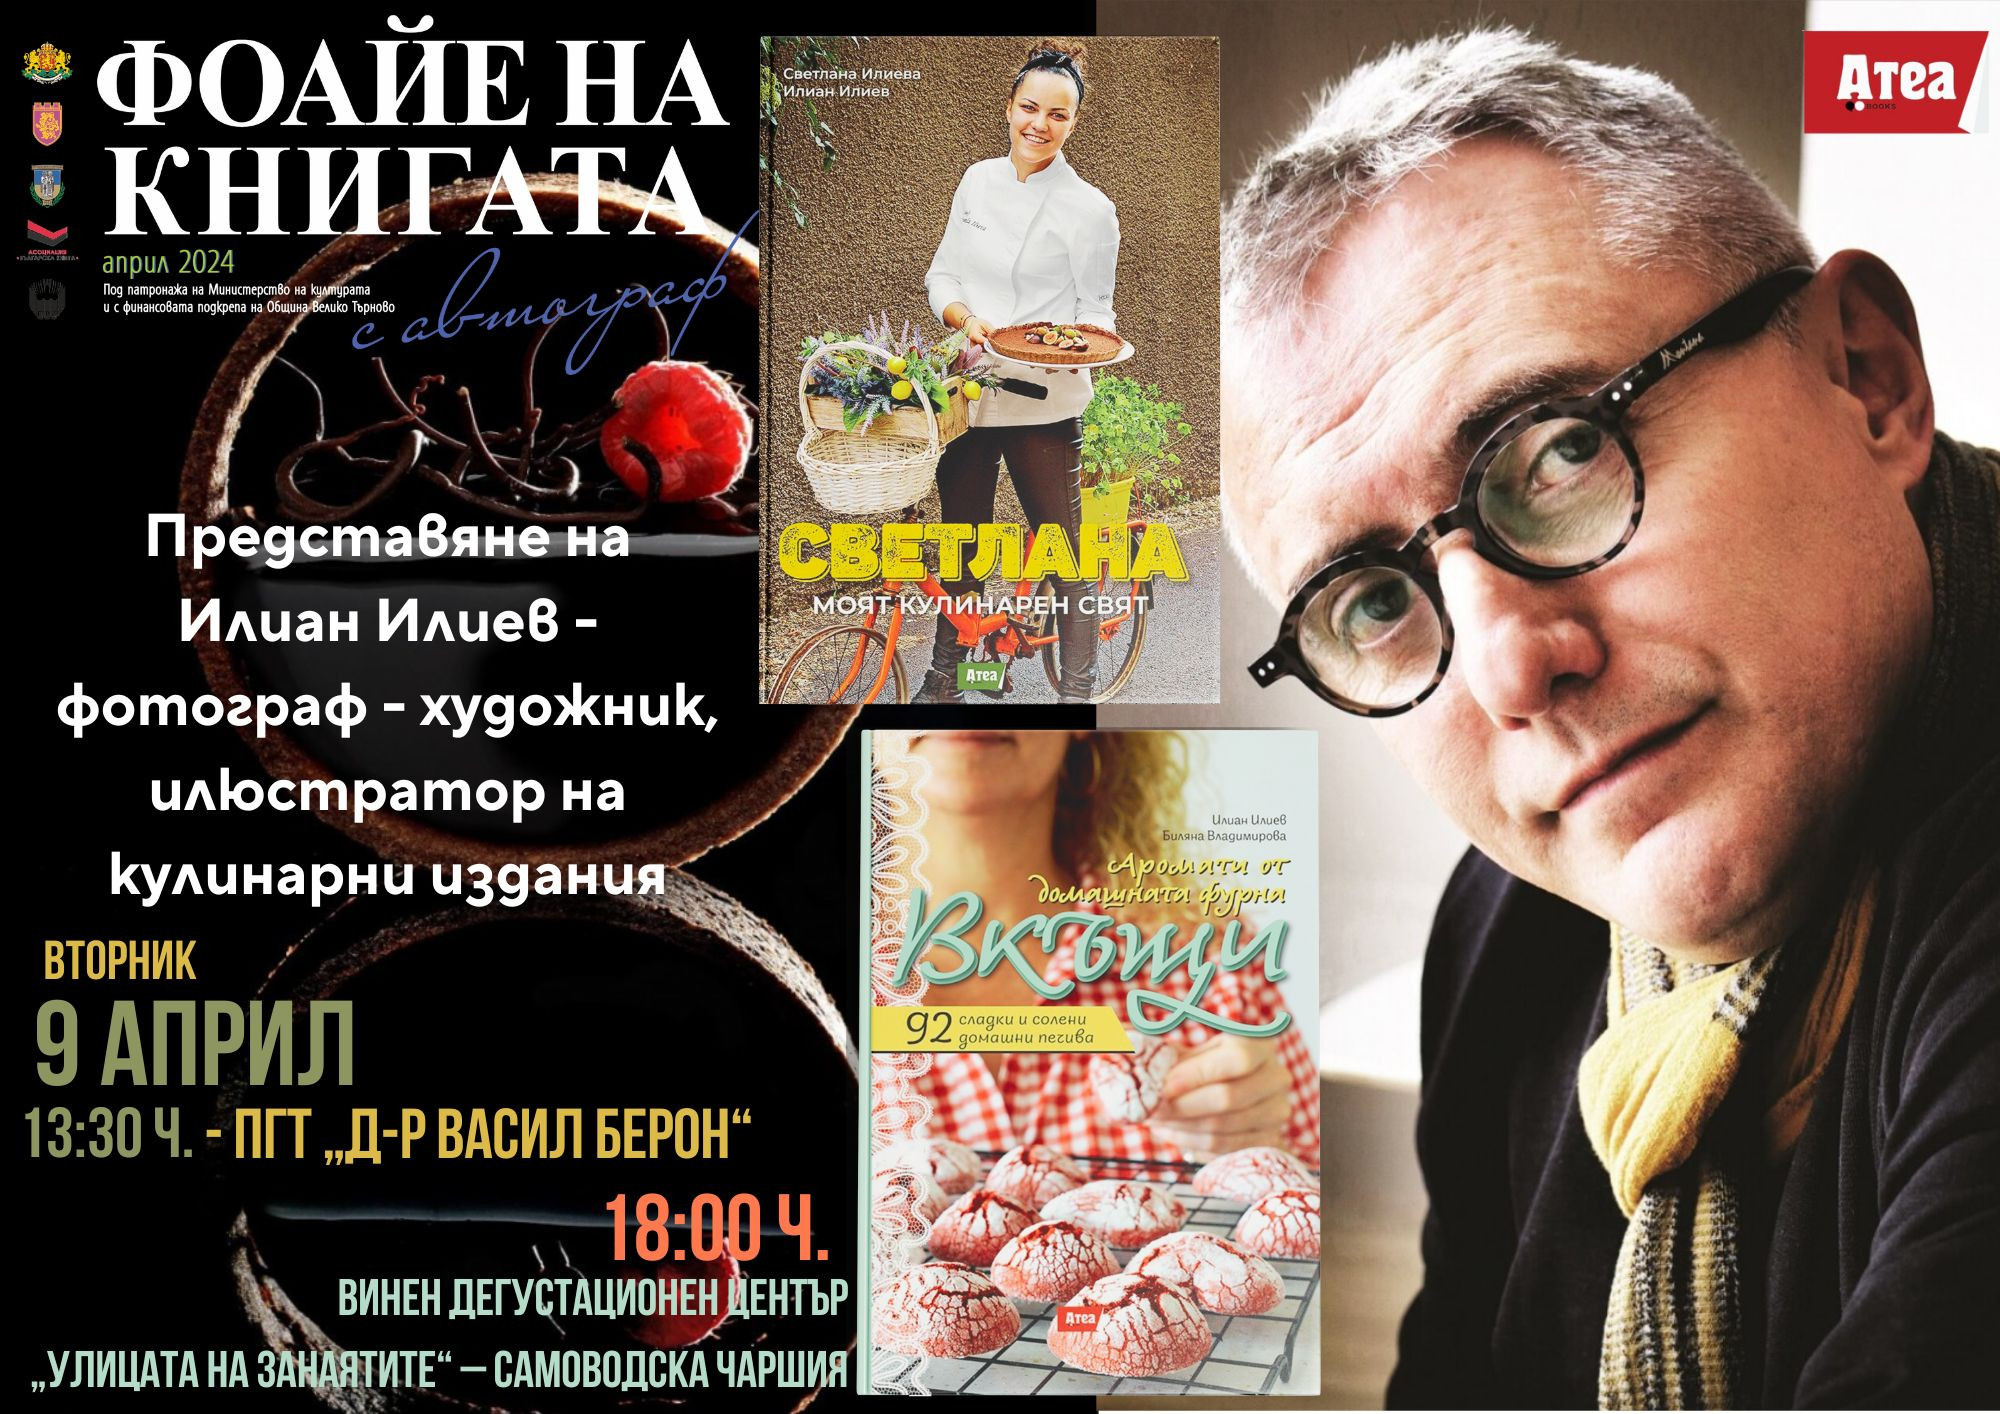 Среща с кулинарния фотограф Илиан Илиев и издателство "Атеа букс", на чаша вино.